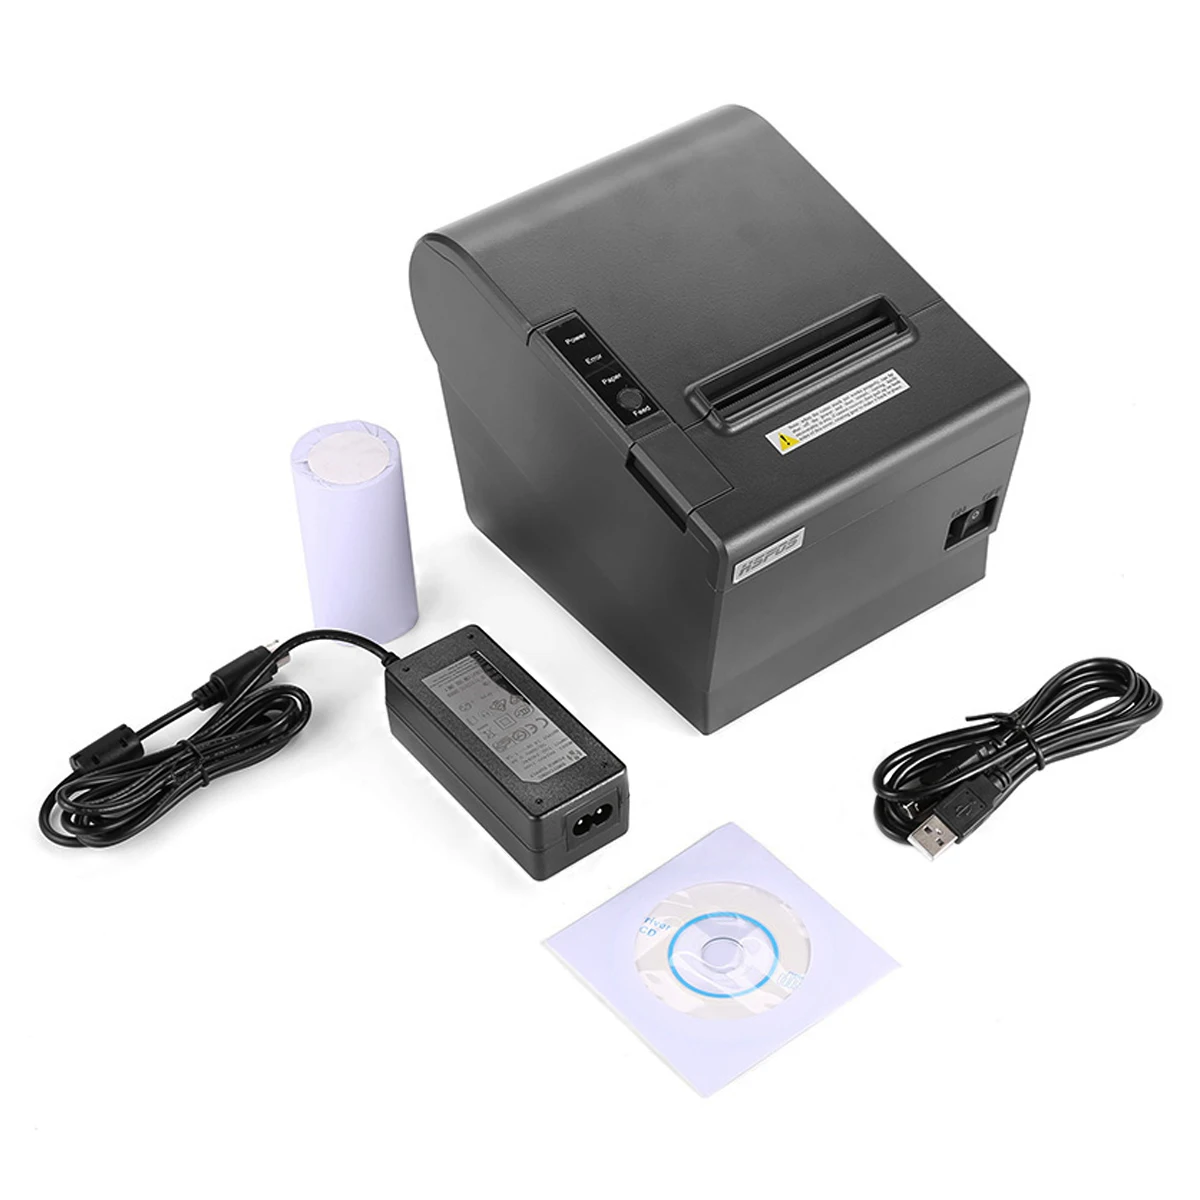 

180mm/s 80mm Receipt Thermal Printer Pos Printer Photo Ticket Printer With USB LAN Interface Free SDK HS-802LU